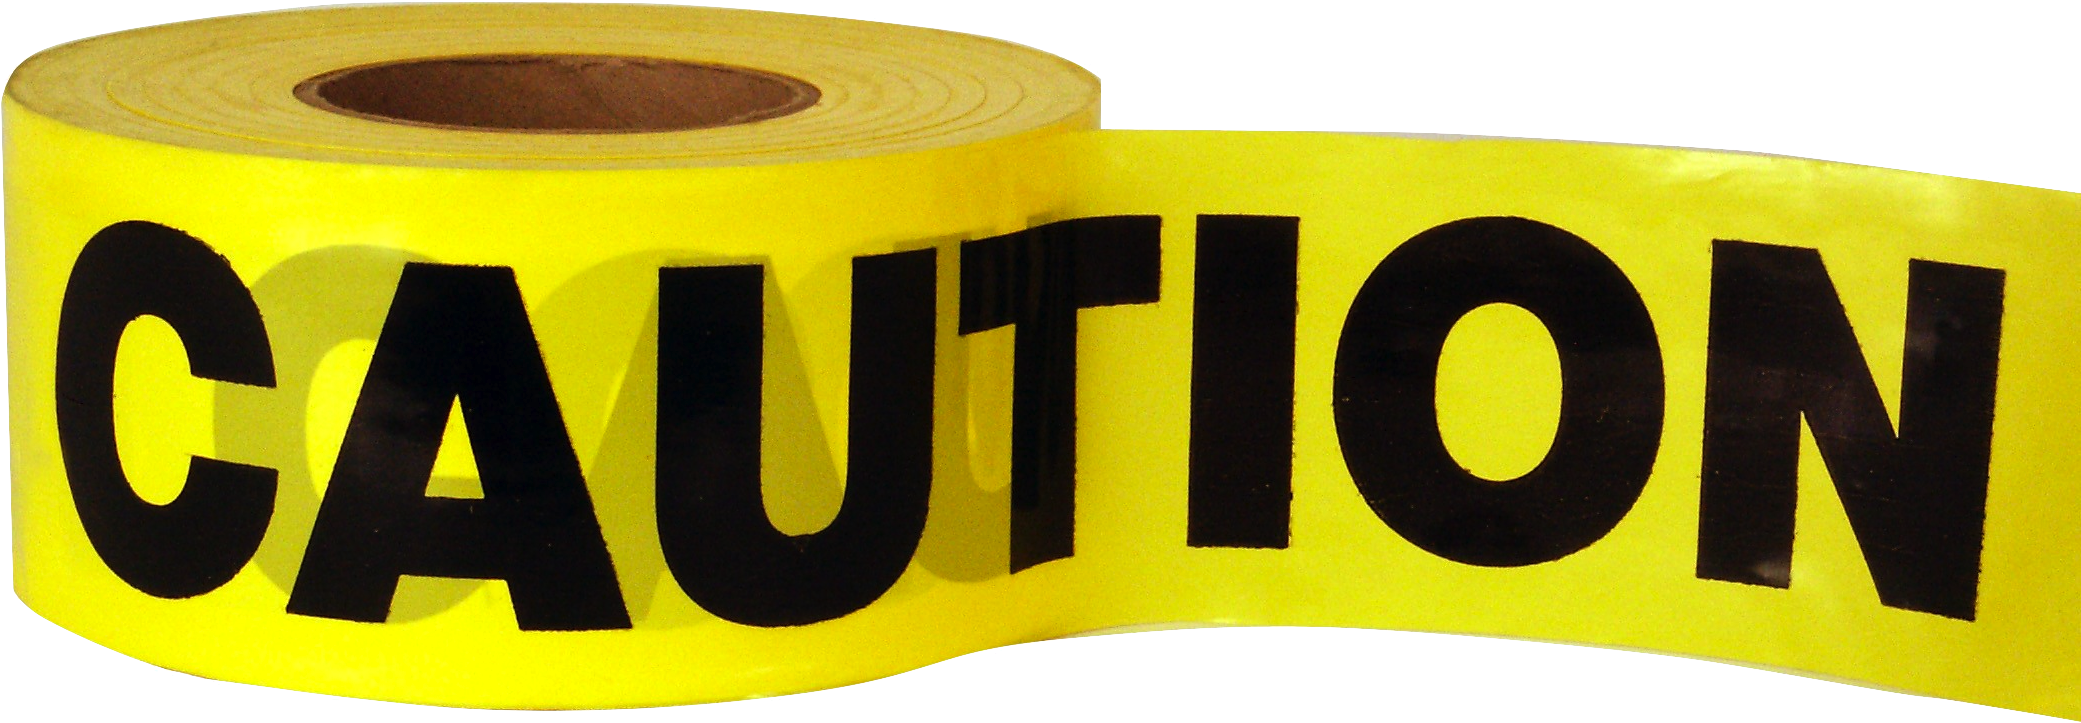 Cut Out Caution Copy - Caution Barricade Tape (2118x1217)